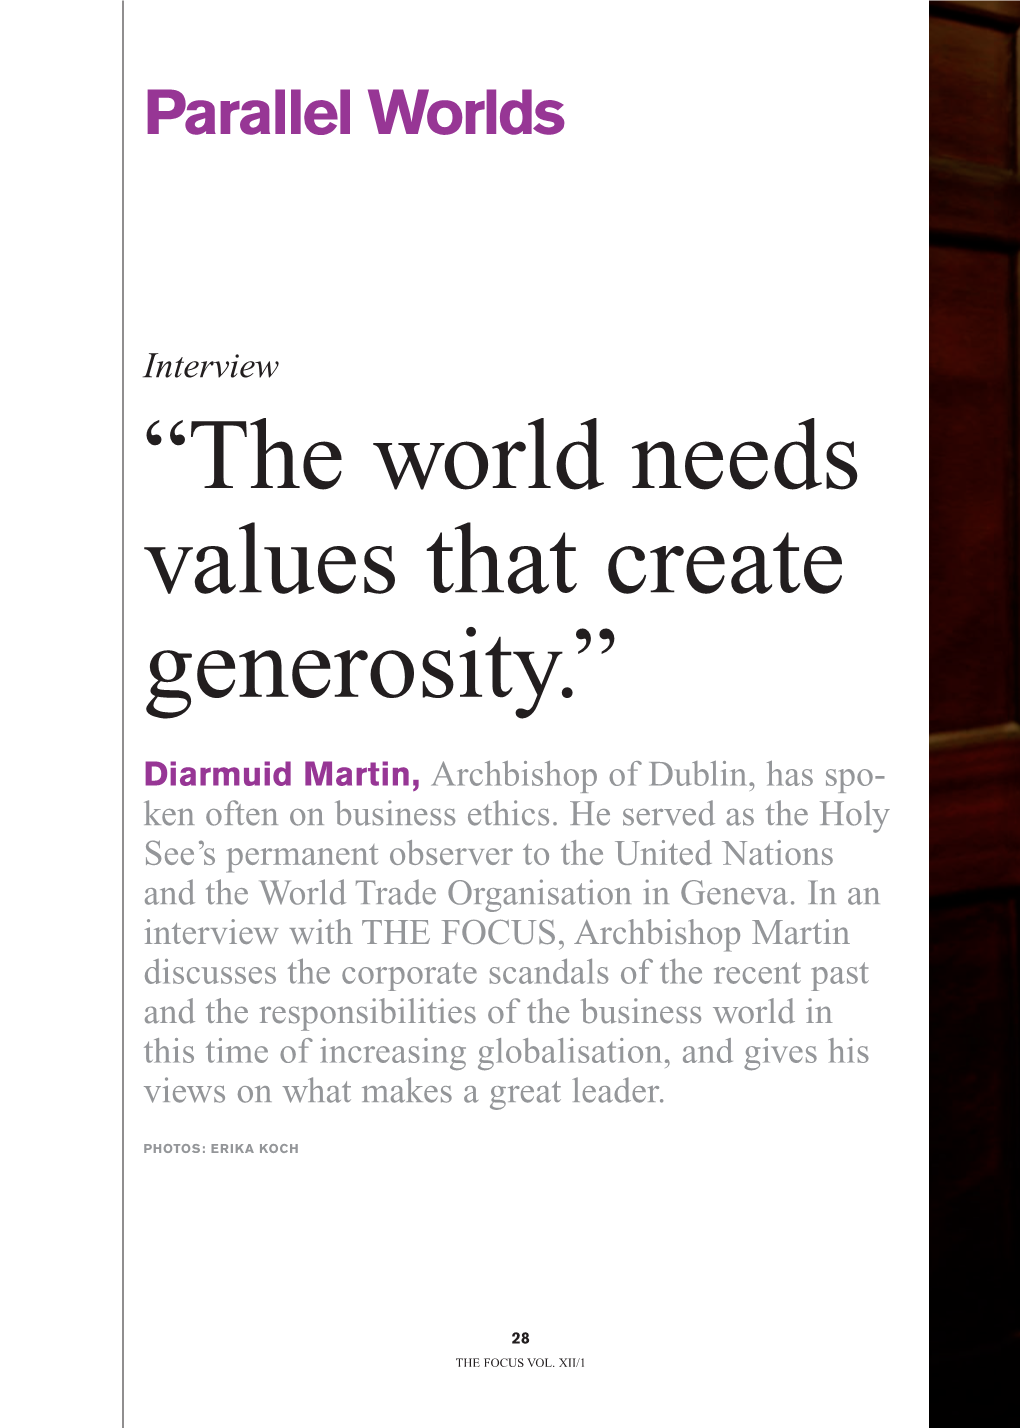 “The World Needs Values That Create Generosity.”